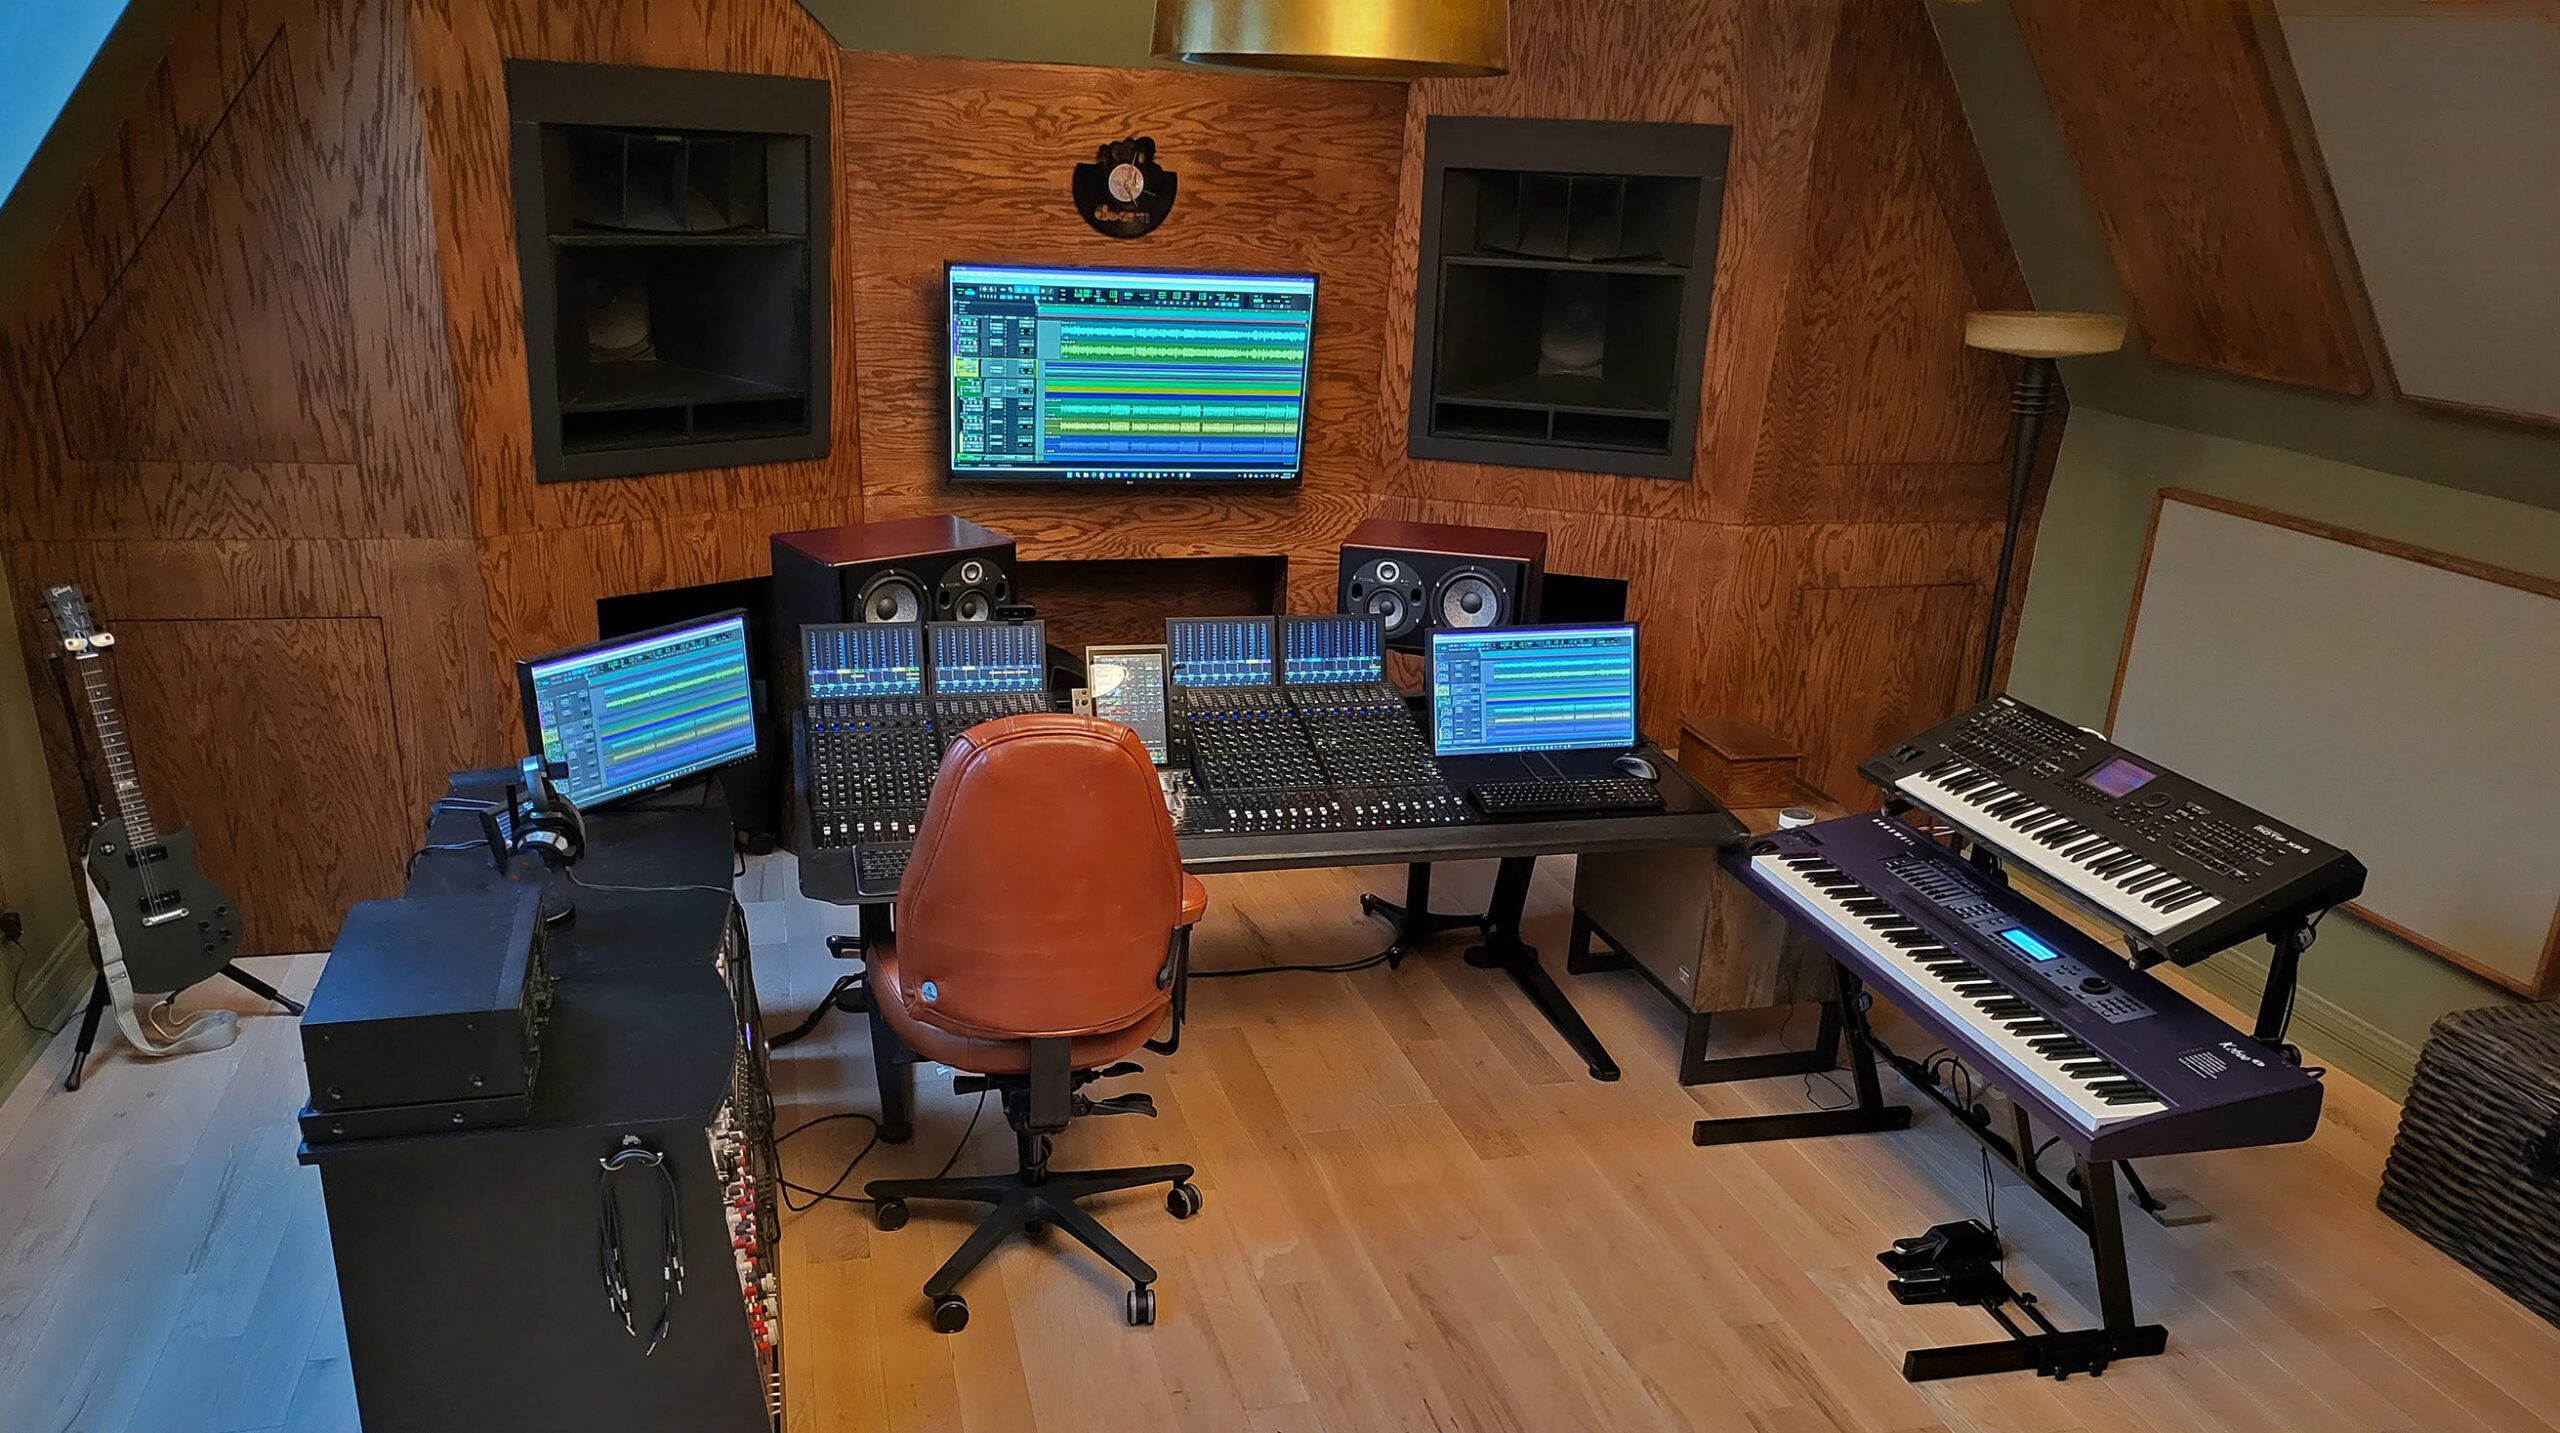 Studio Five